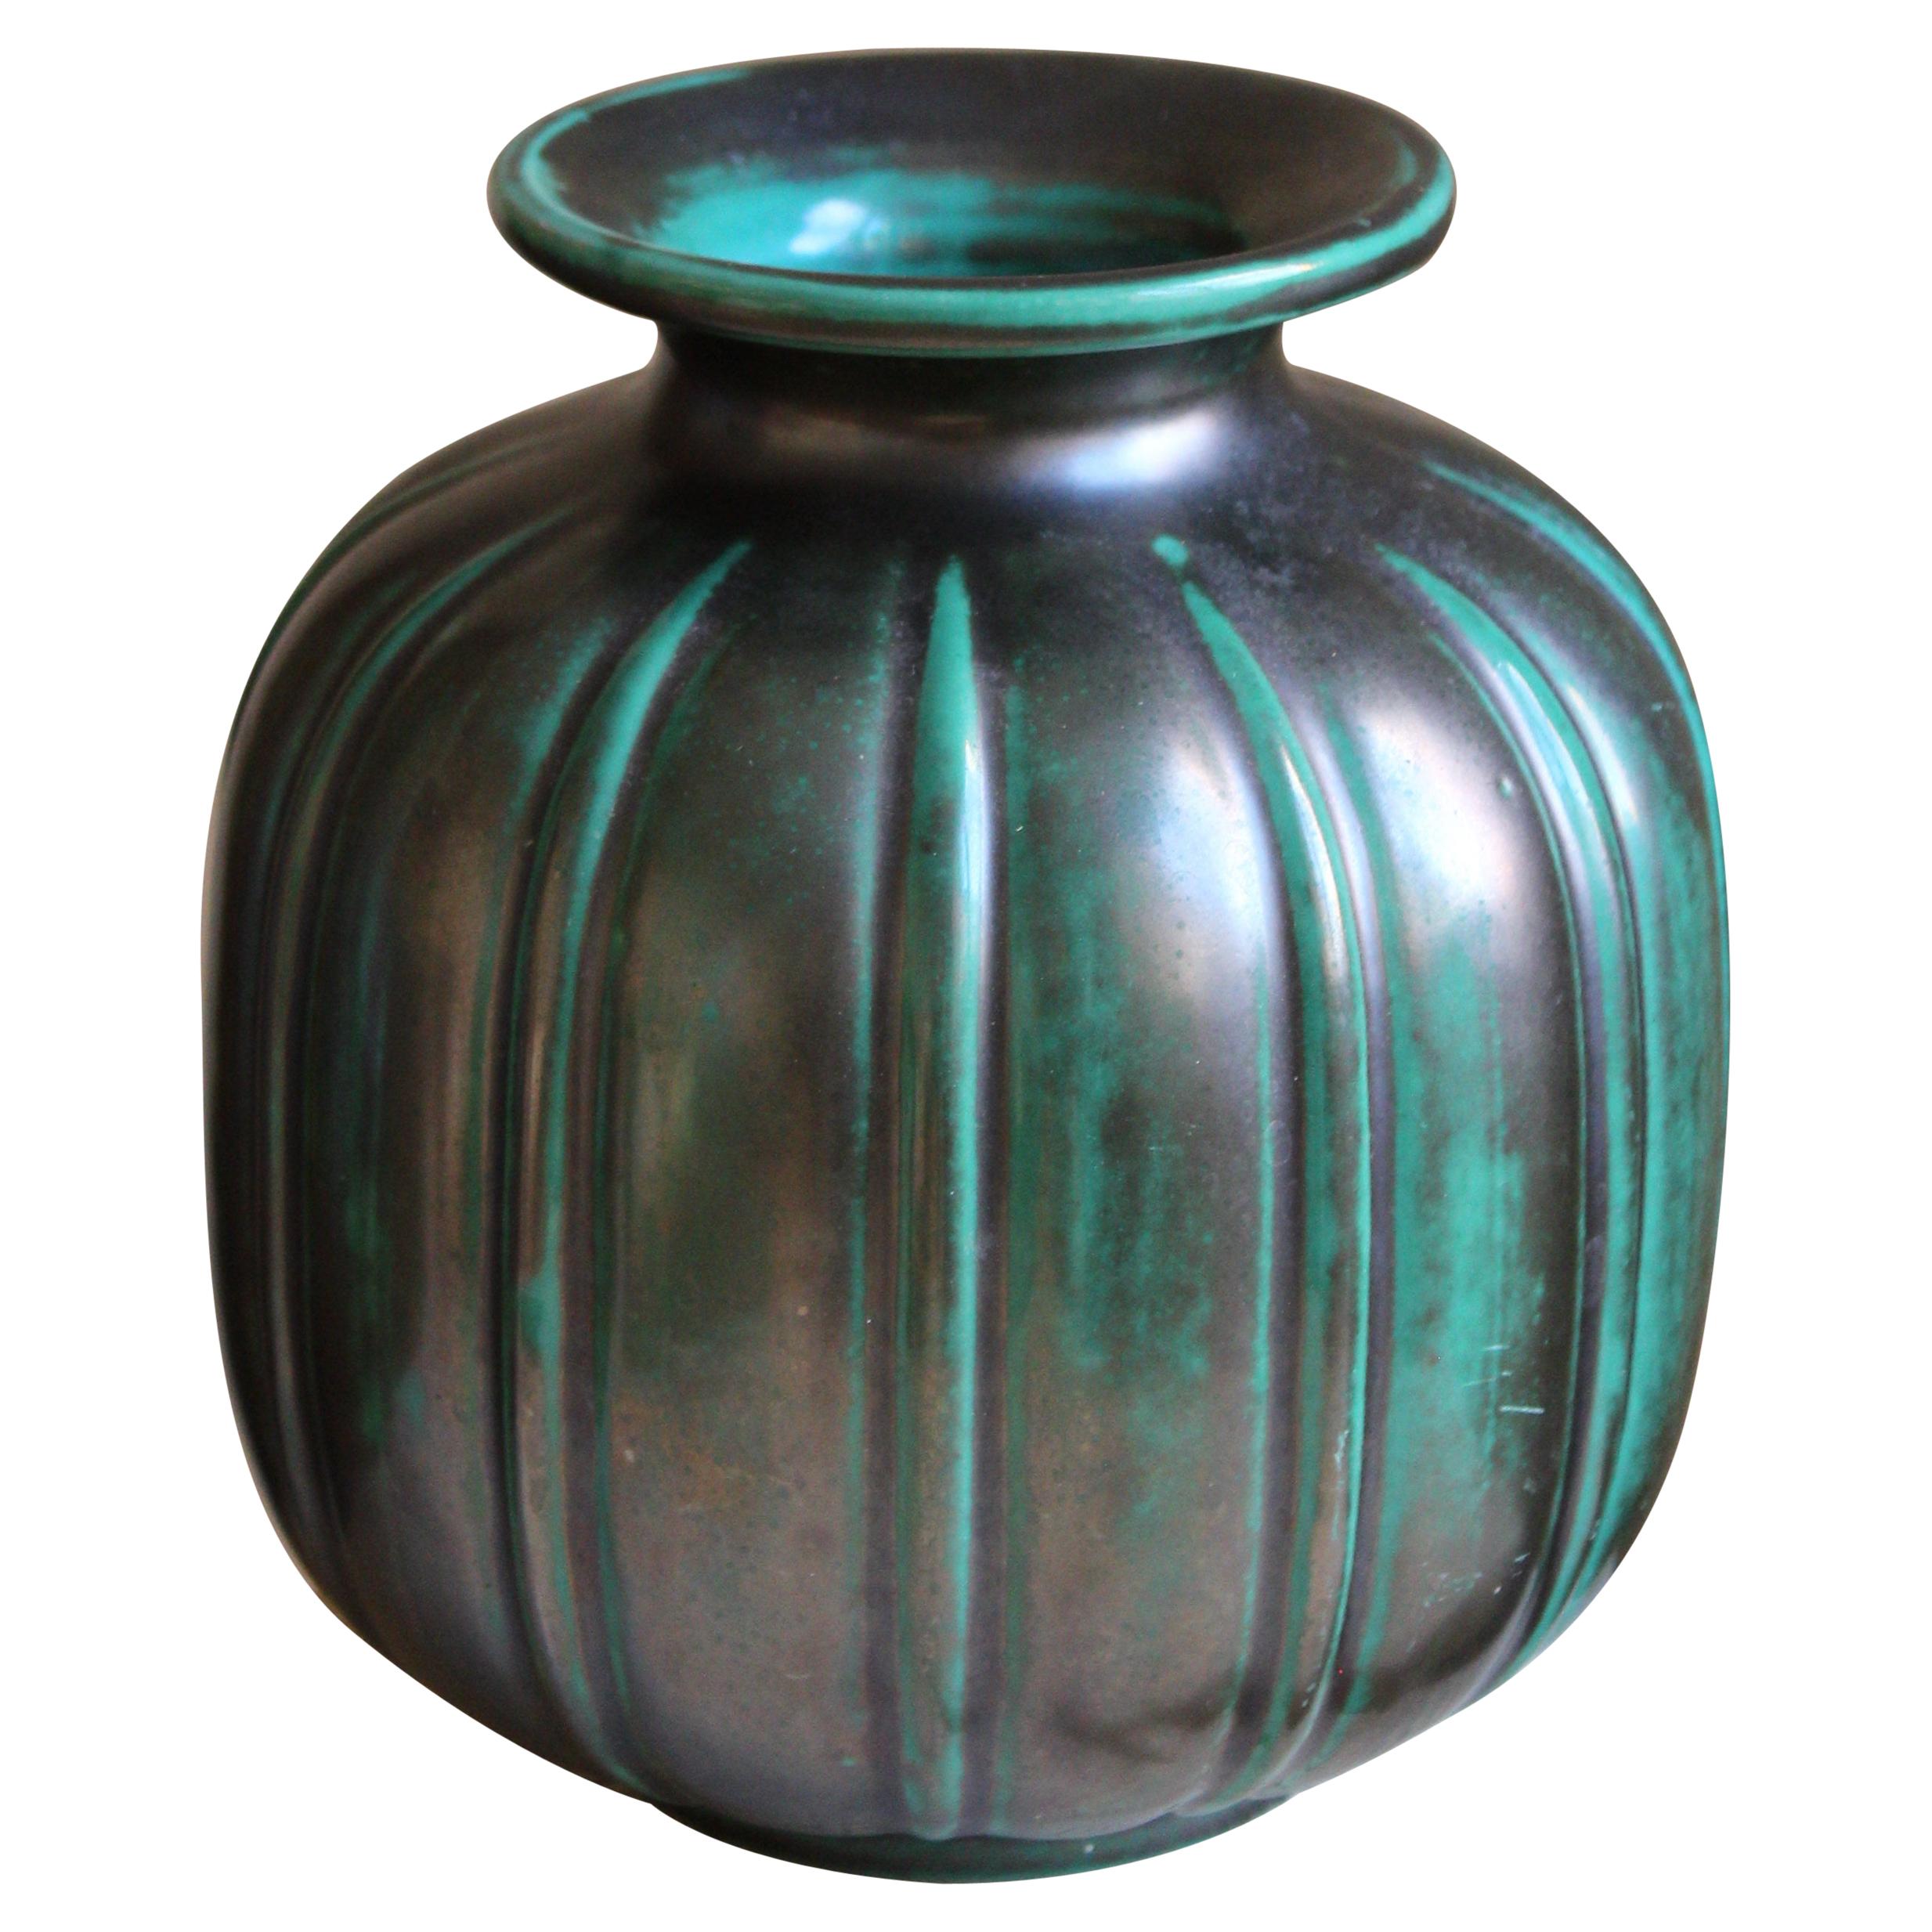 Gertrud Lönegren, Modernist Vase, Green Glazed Stoneware, St. Eriks Upsala 1930s